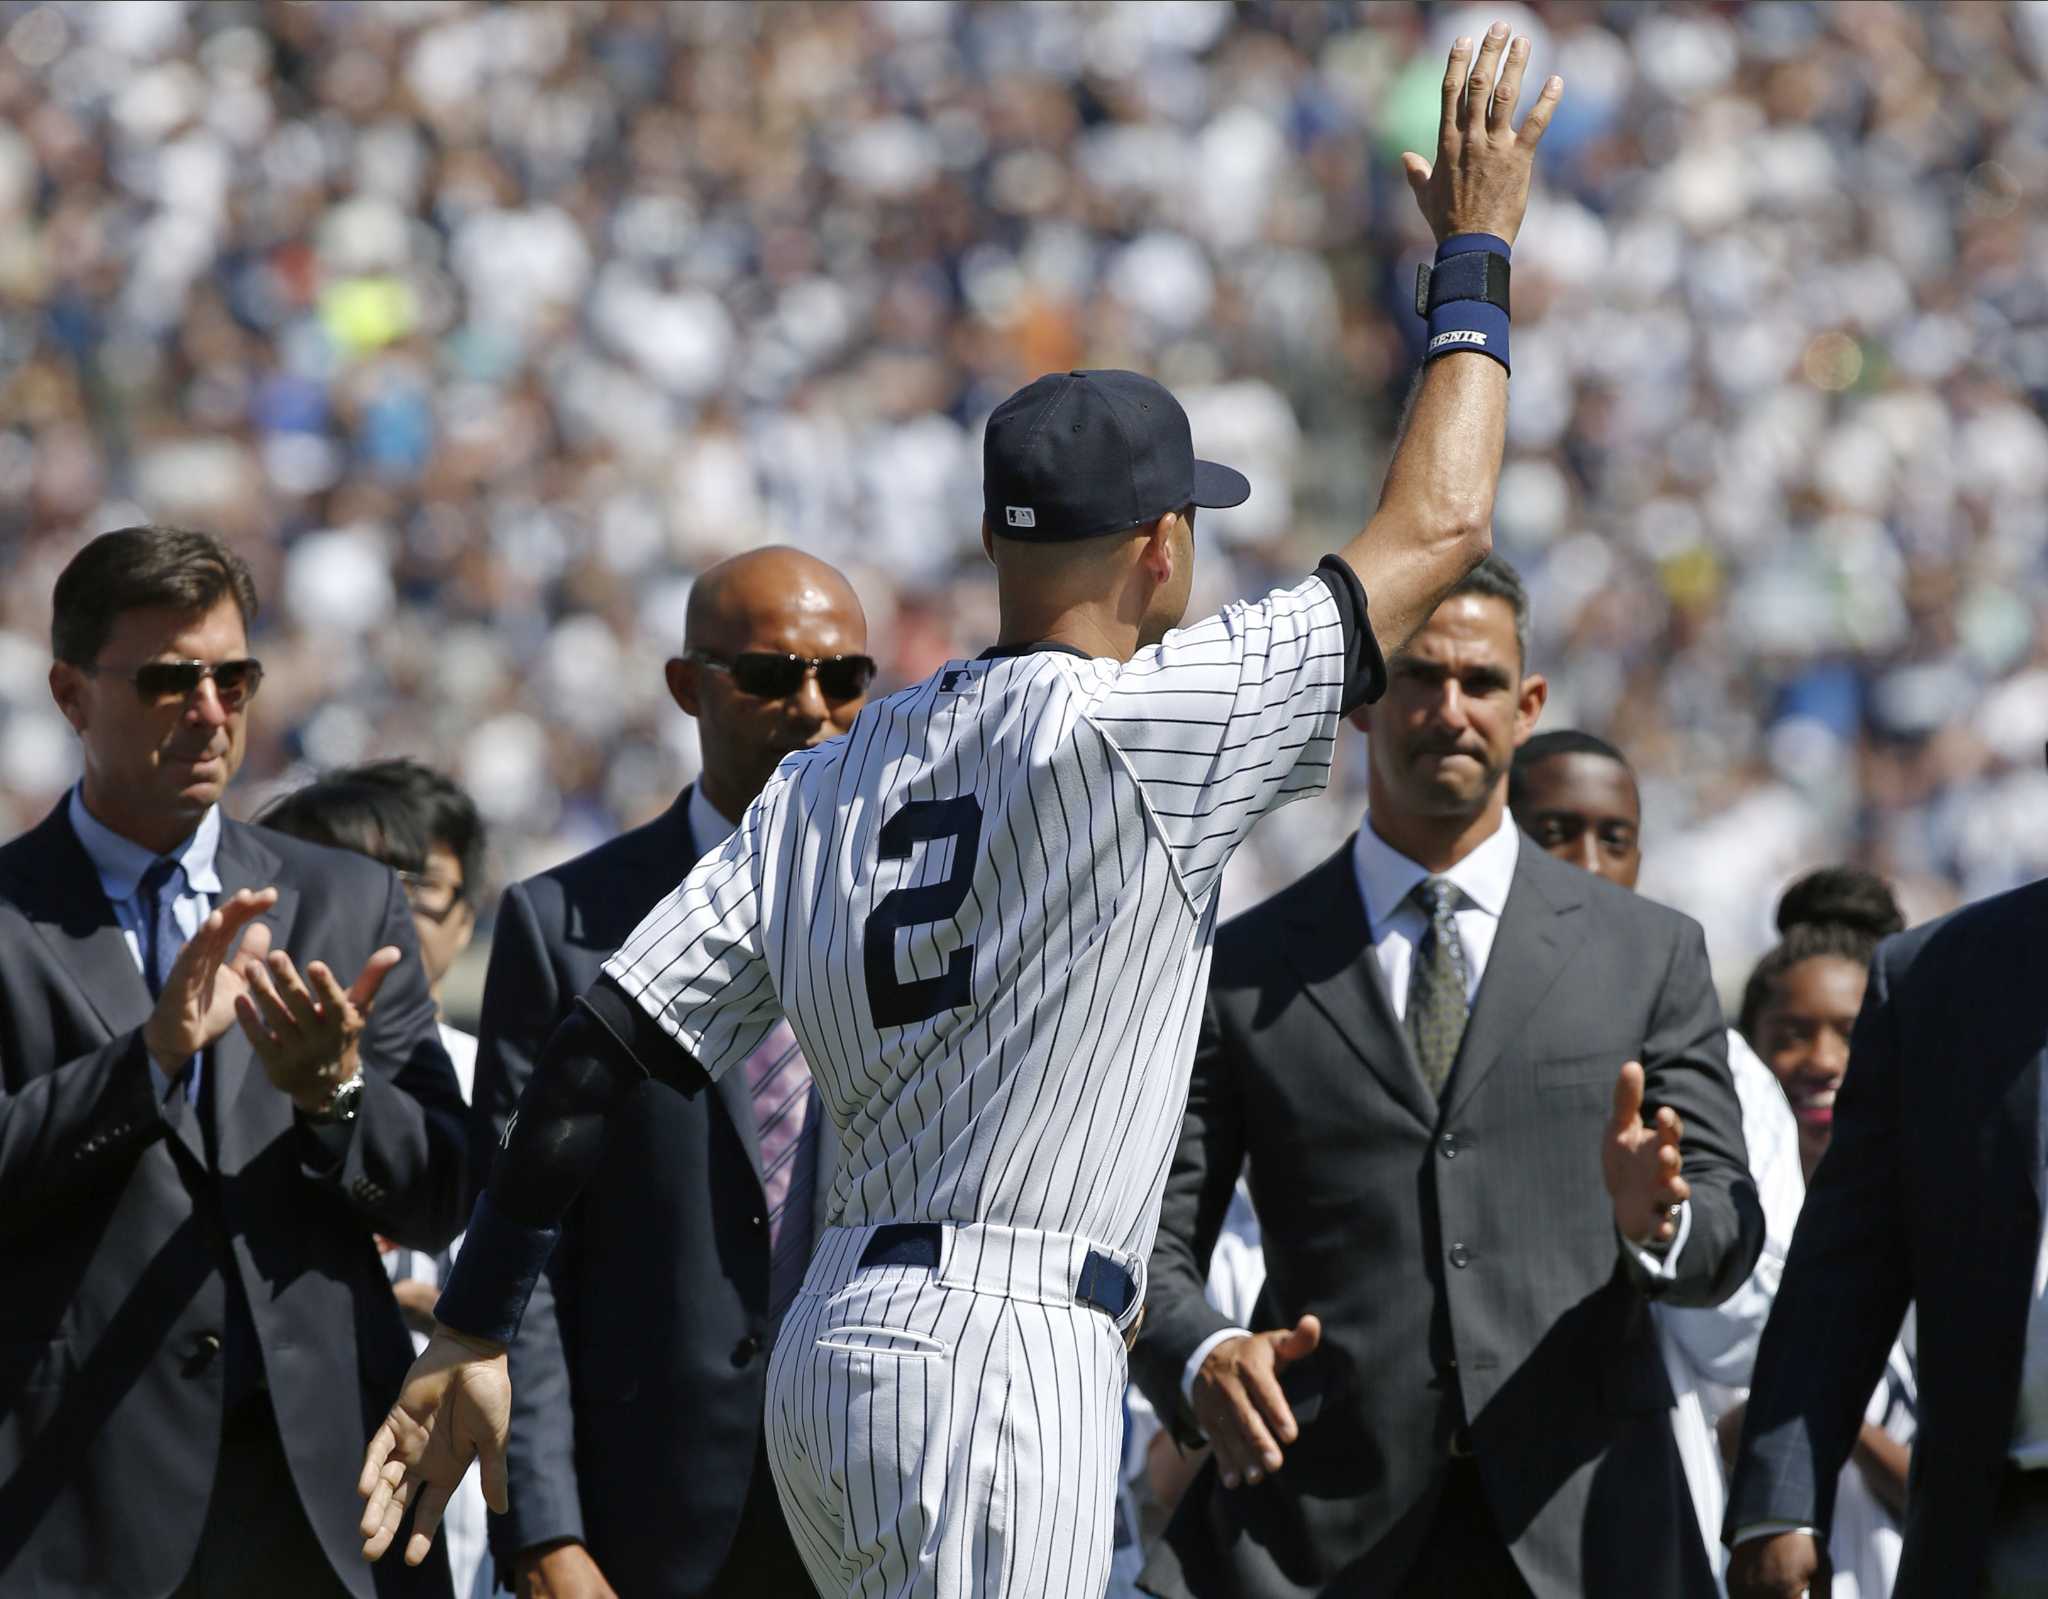 Highlights of Jorge Posada's pregame ceremony at Yankee Stadium